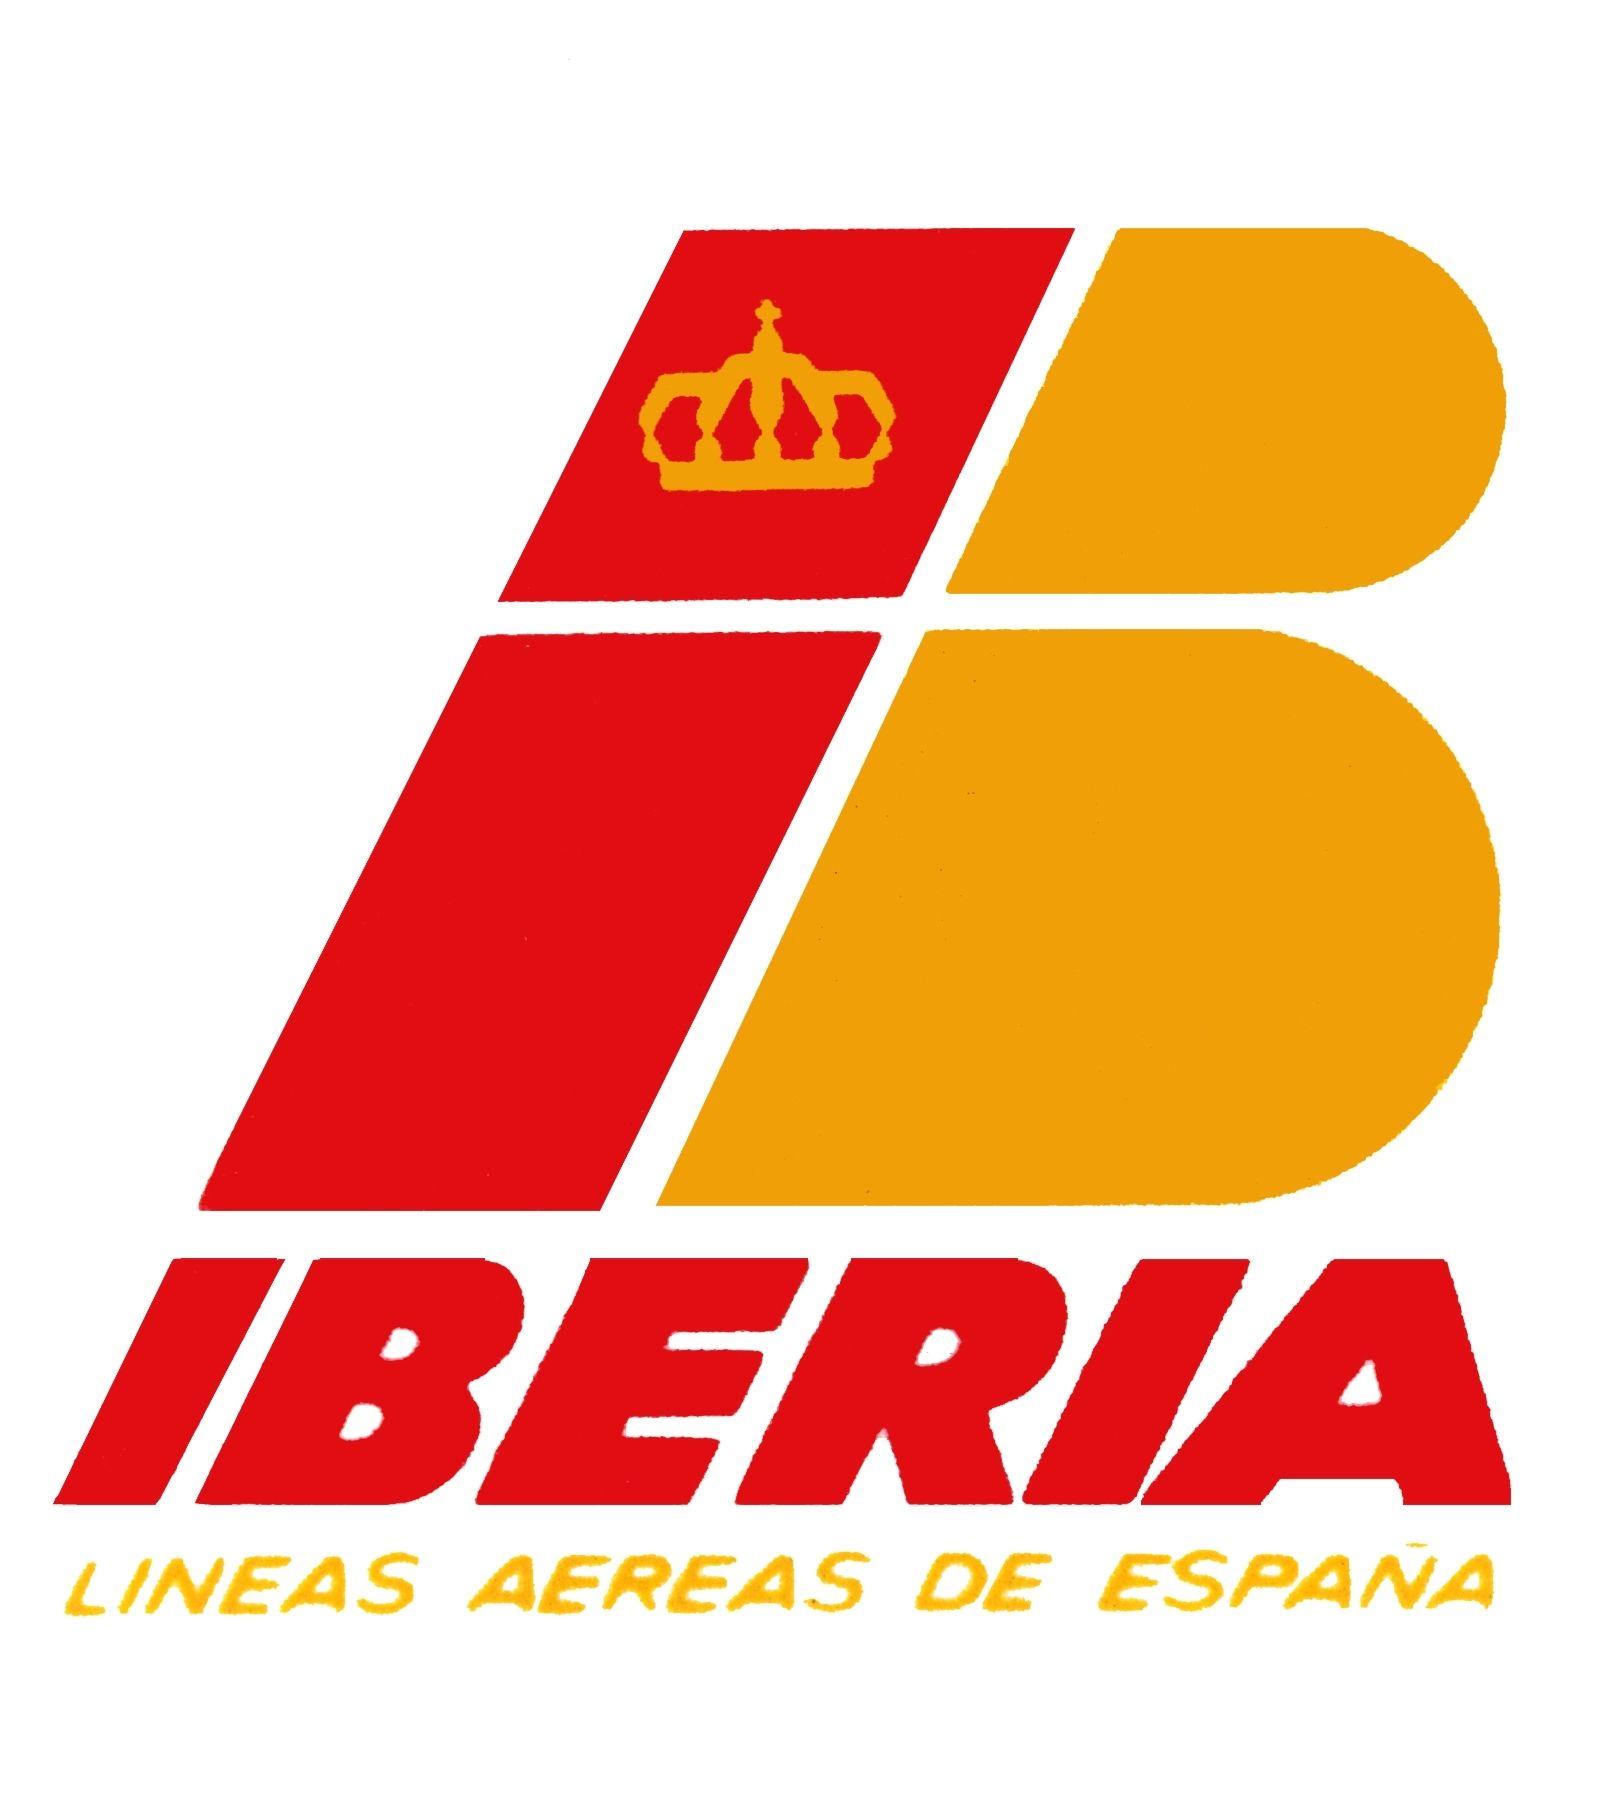 Iberia Logo - Iberia Airline logo - Spain | ✈ AIR LINES ✈ | Pinterest | Airline ...